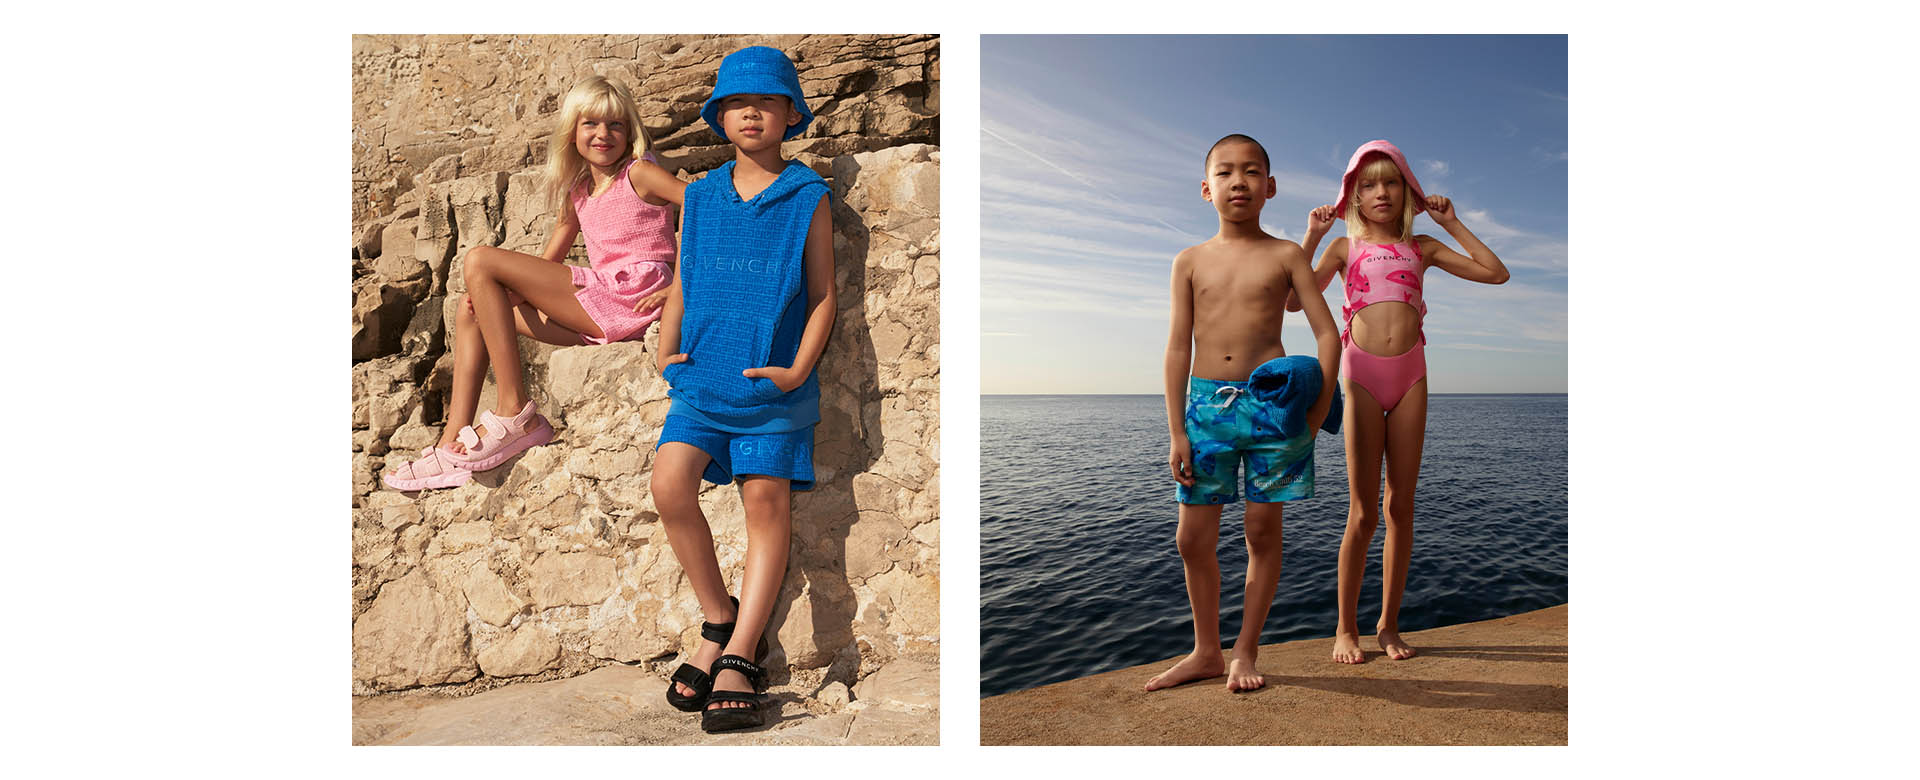 luxury brand givenchy beachwear for boys and girls